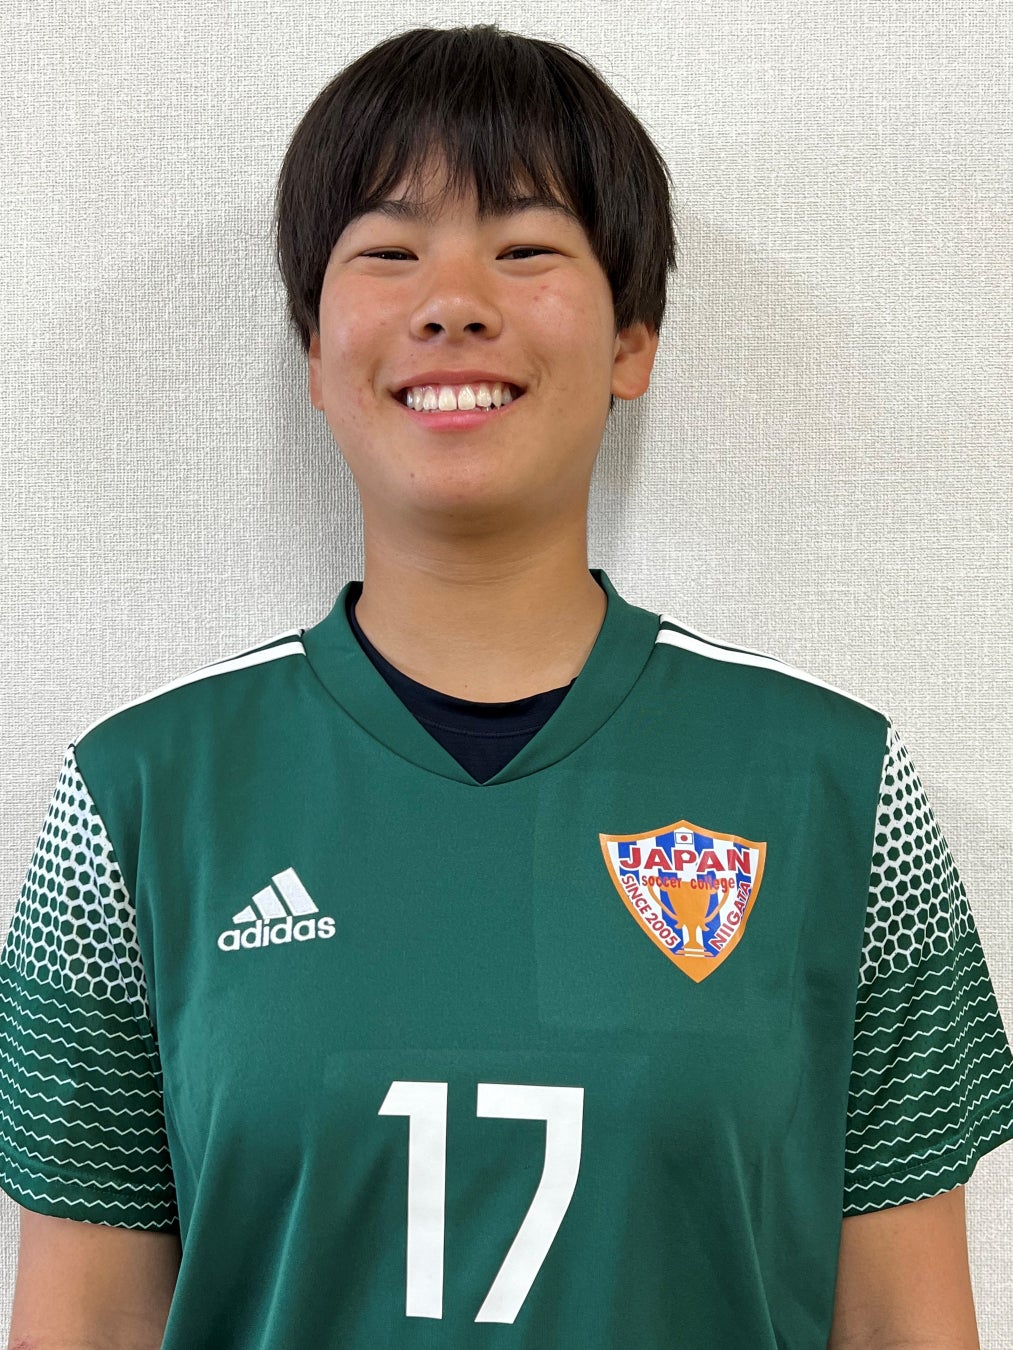 【JAPANサッカーカレッジ初】坂田湖琳選手U-17日本女子代表メンバー選出のお知らせ